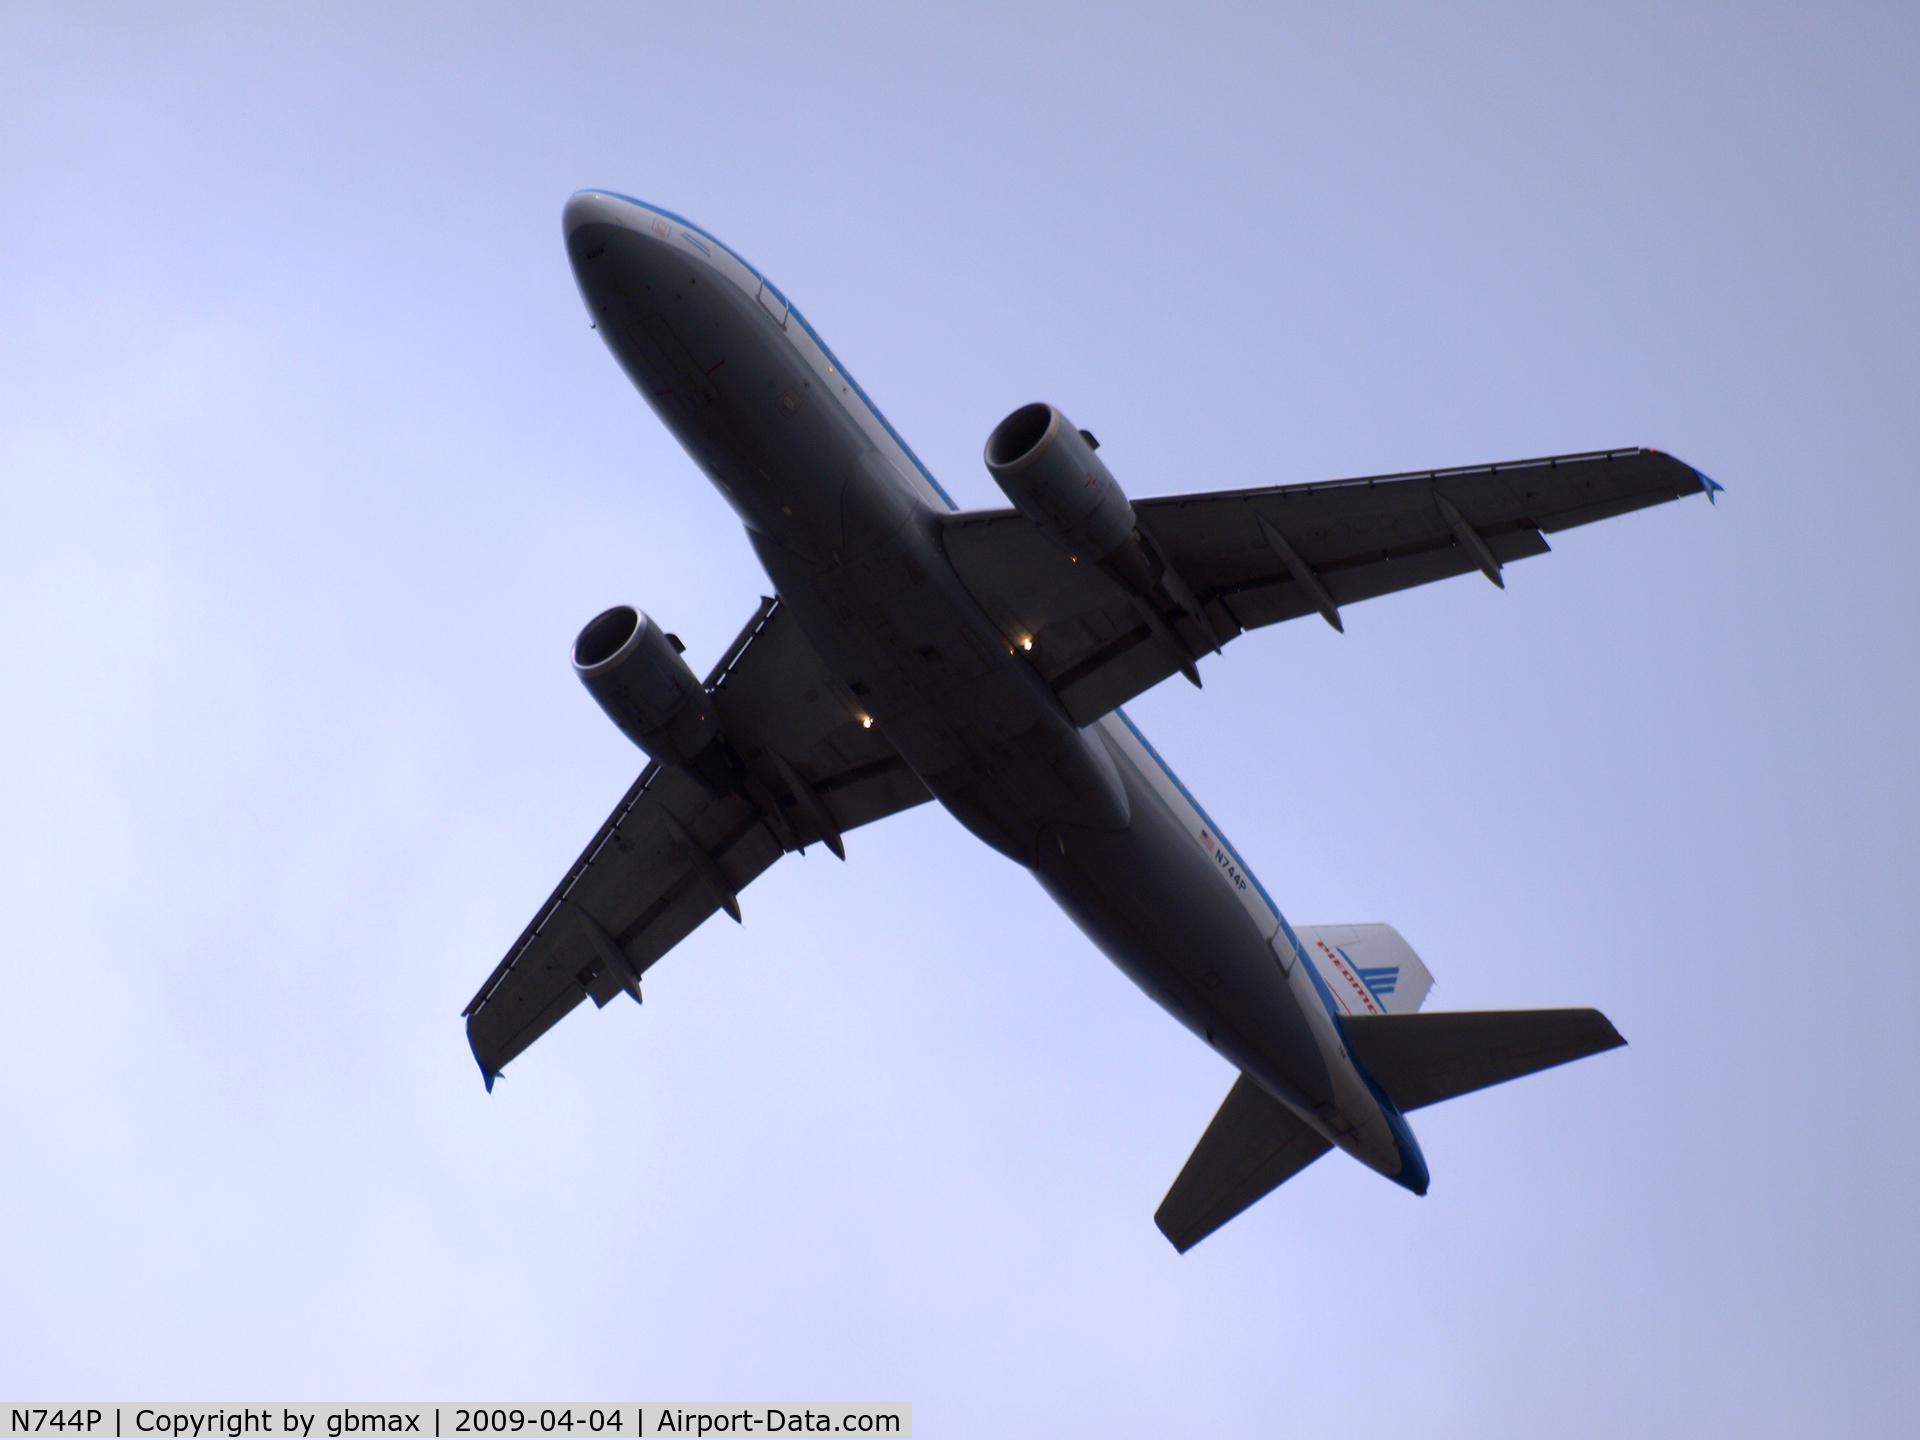 N744P, 2000 Airbus A319-112 C/N 1287, Flying @ ~3,500 feet high, going to a landing at JFK